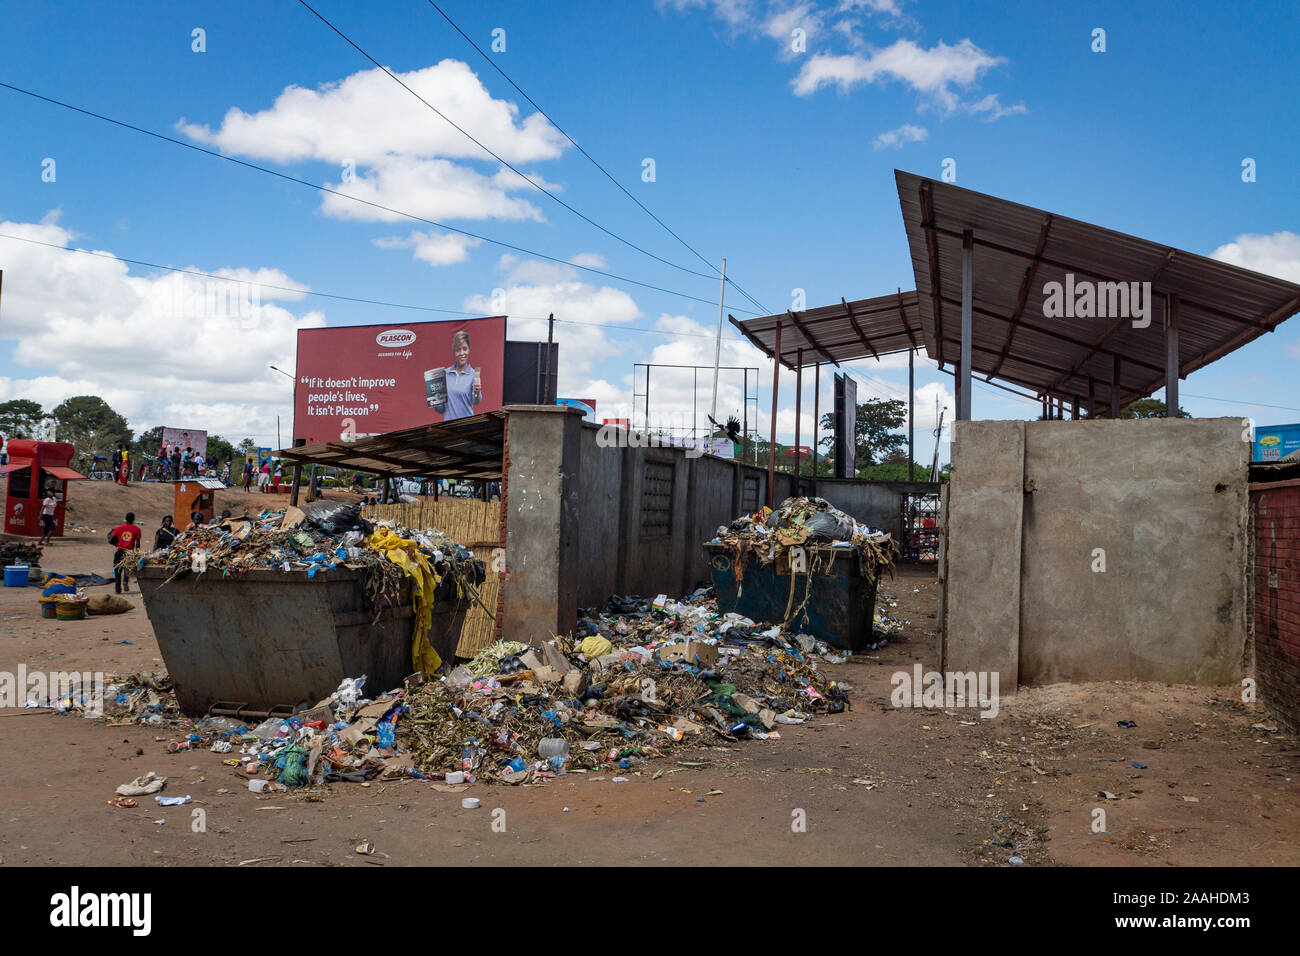 Rubbish collection point in Mzuzu Market, Malawi Stock Photo